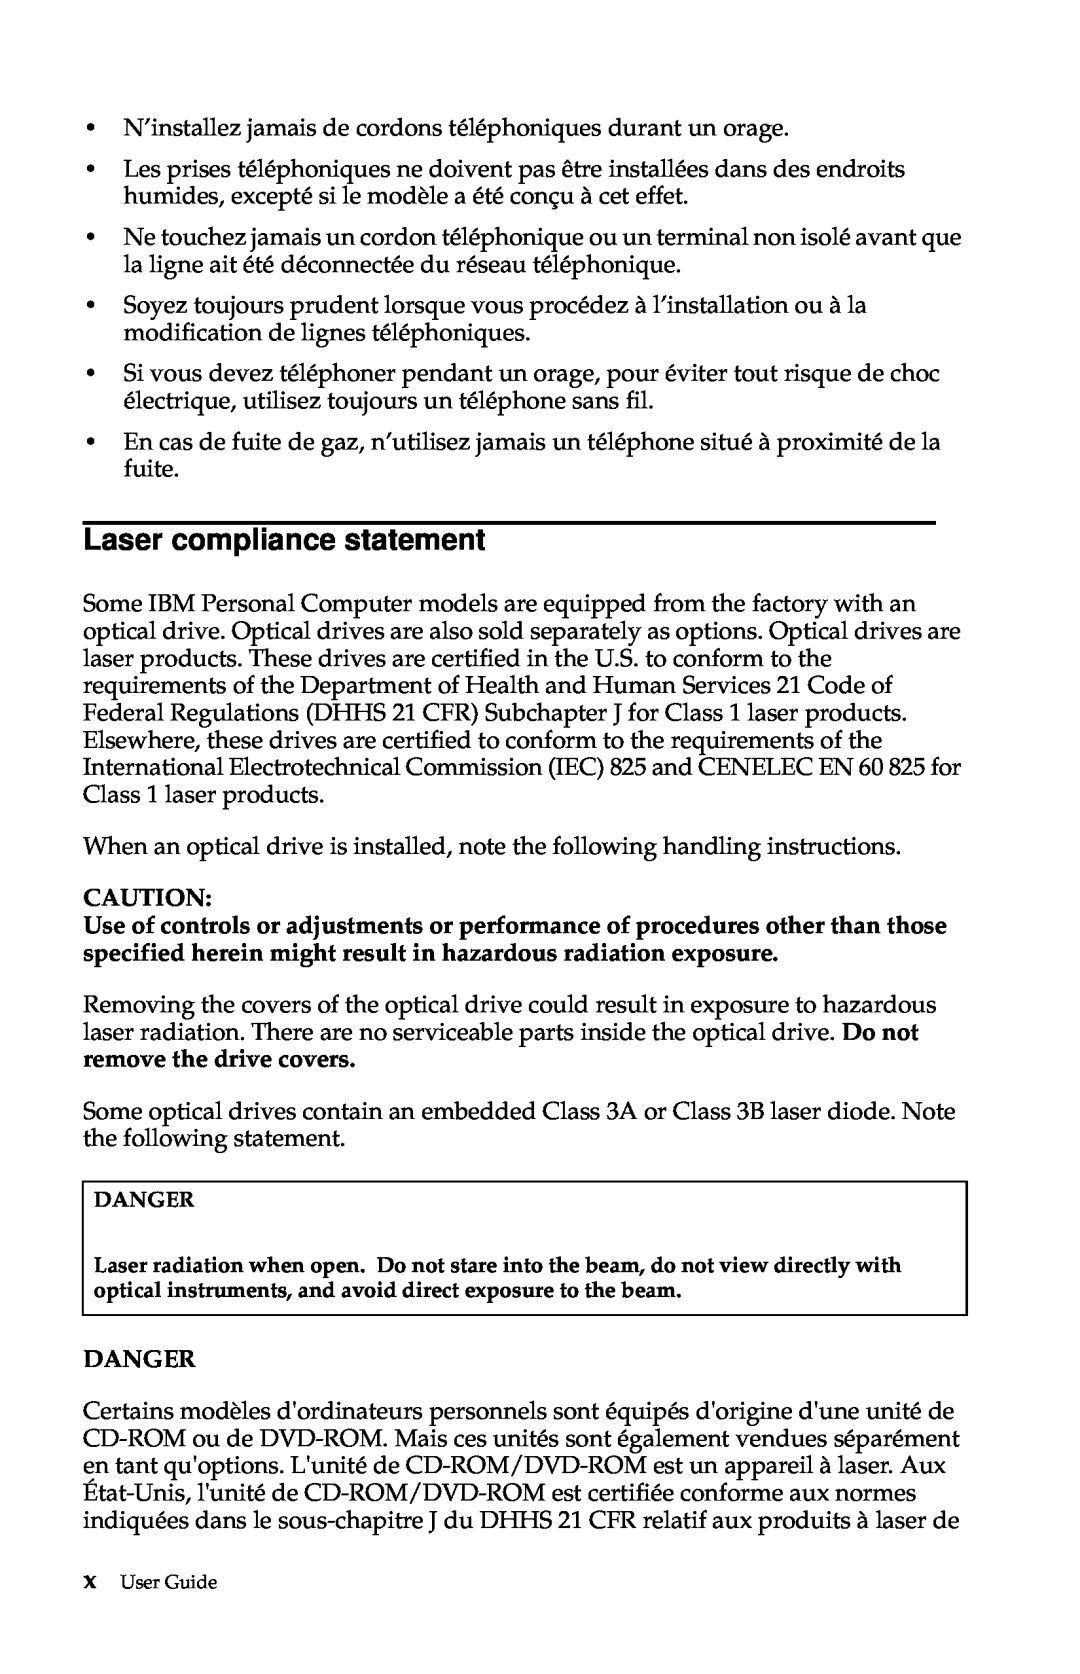 IBM 6274, 2283 manual Laser compliance statement 